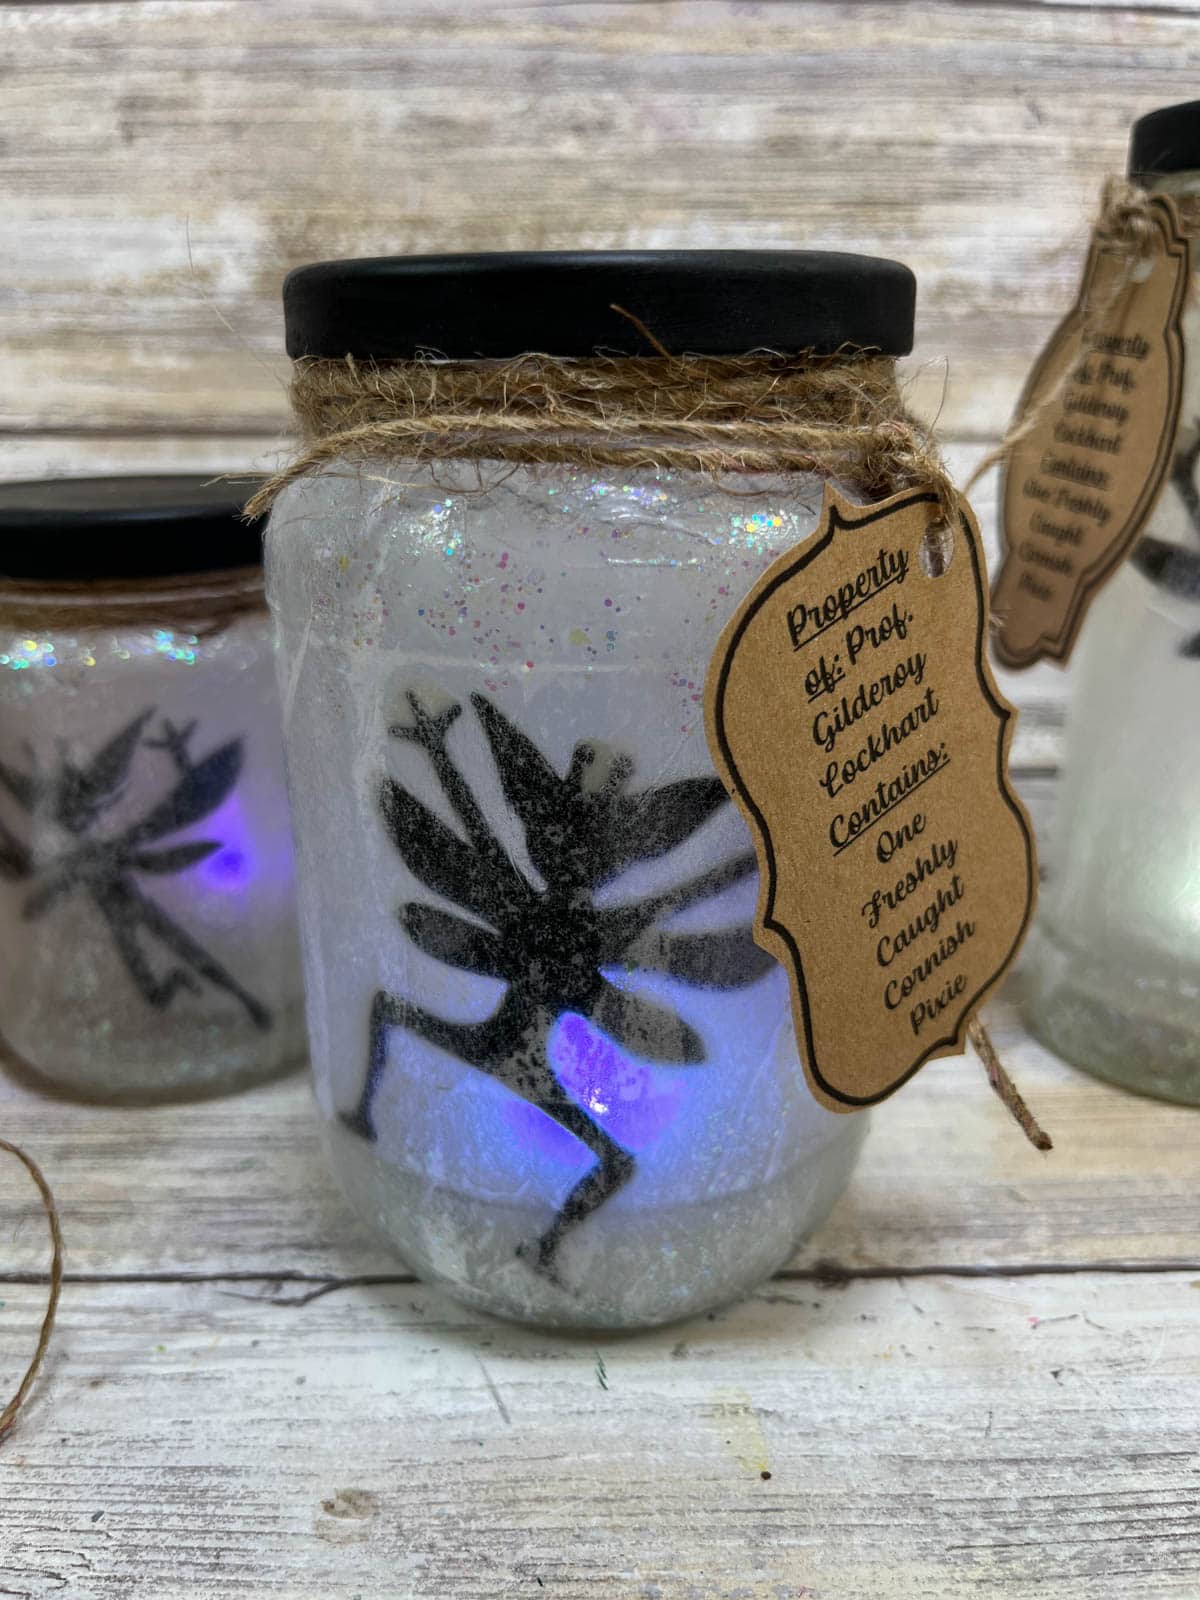 Harry Potter cornish pixie jar craft with purple light